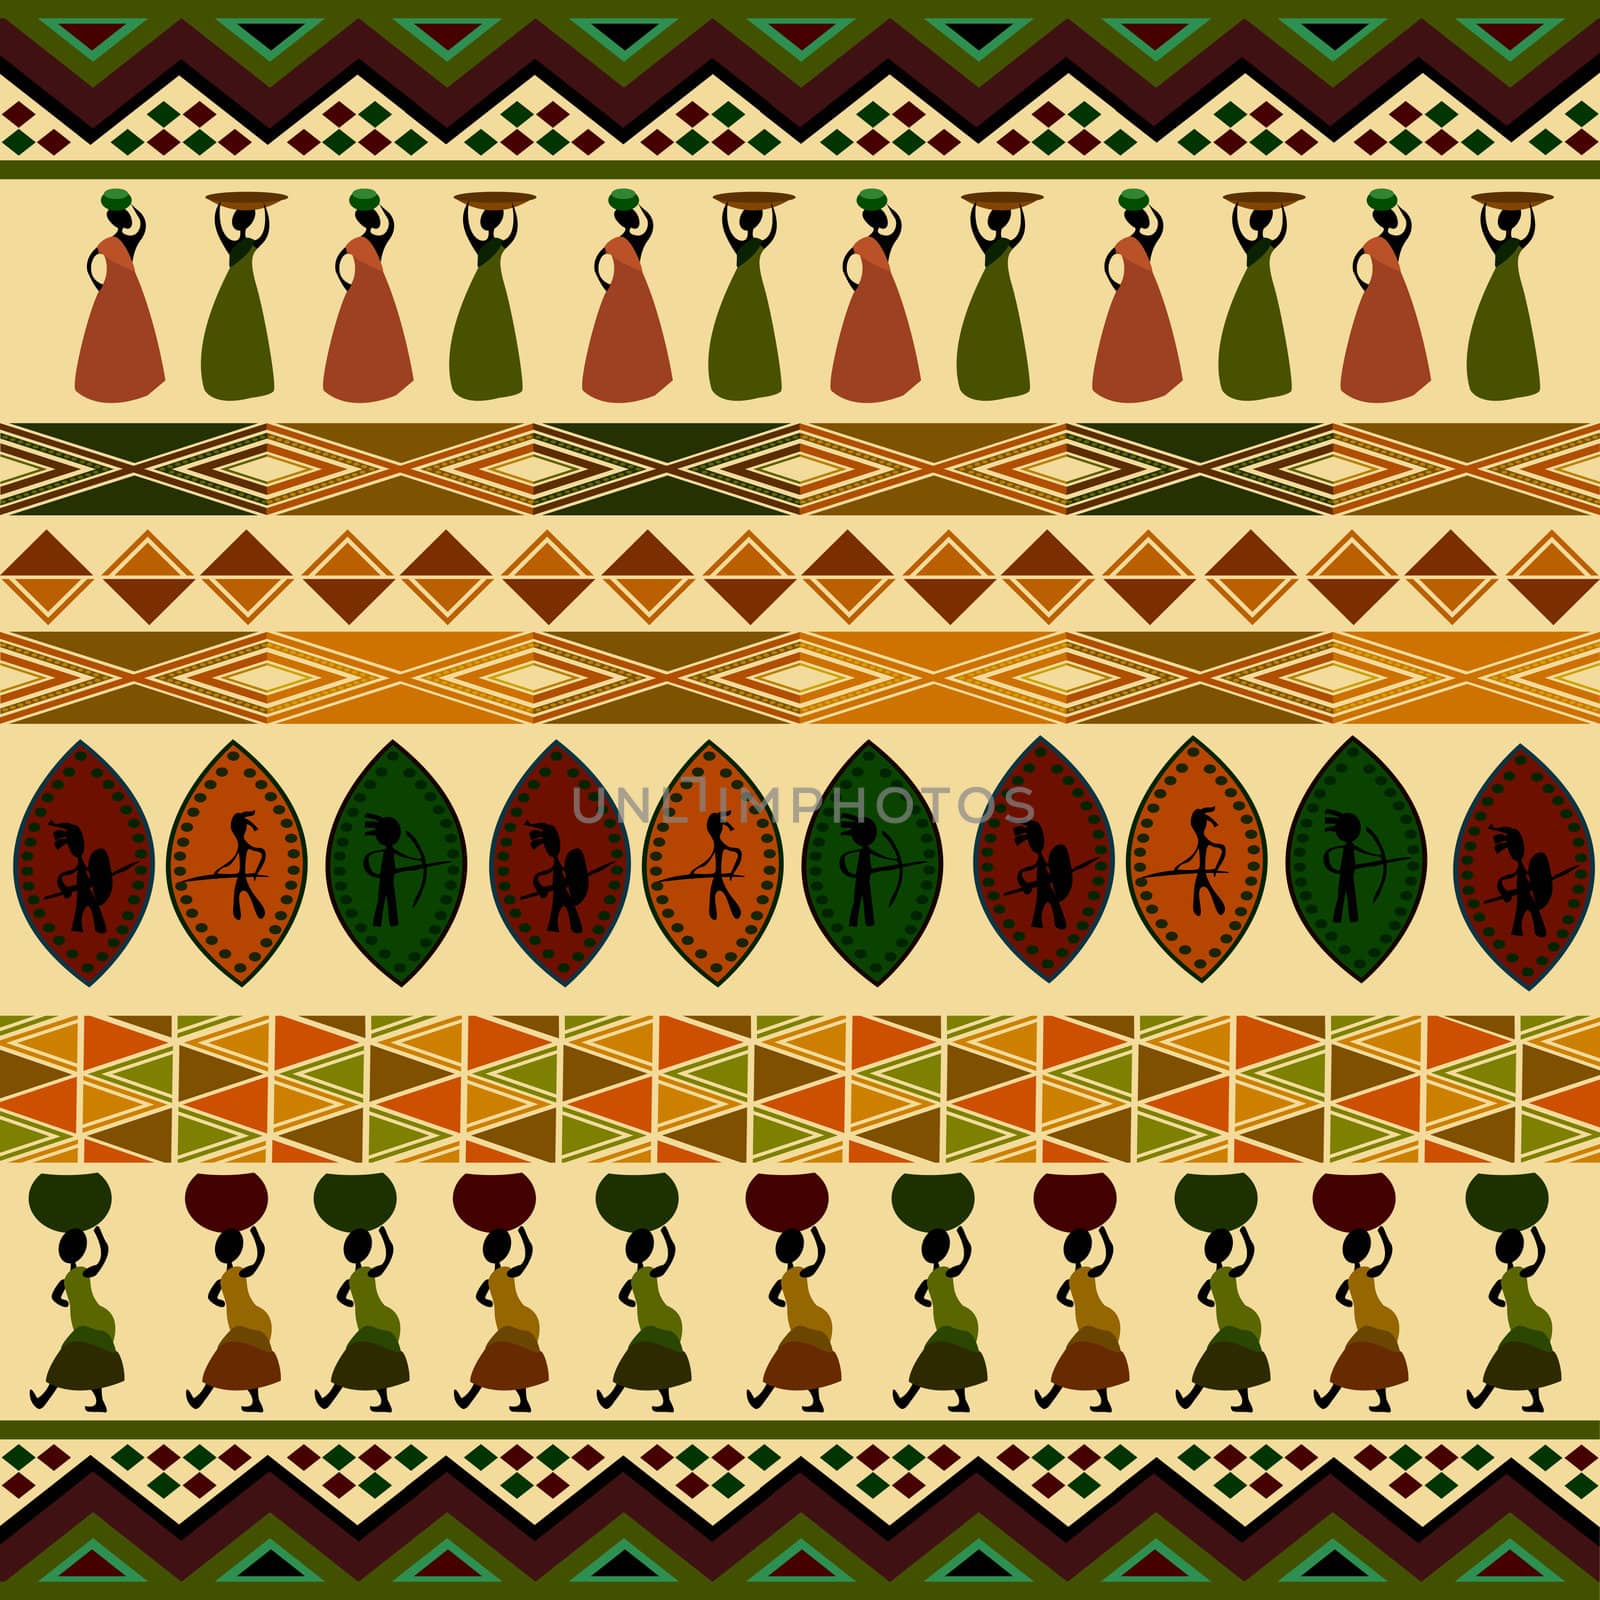 African design by Lirch